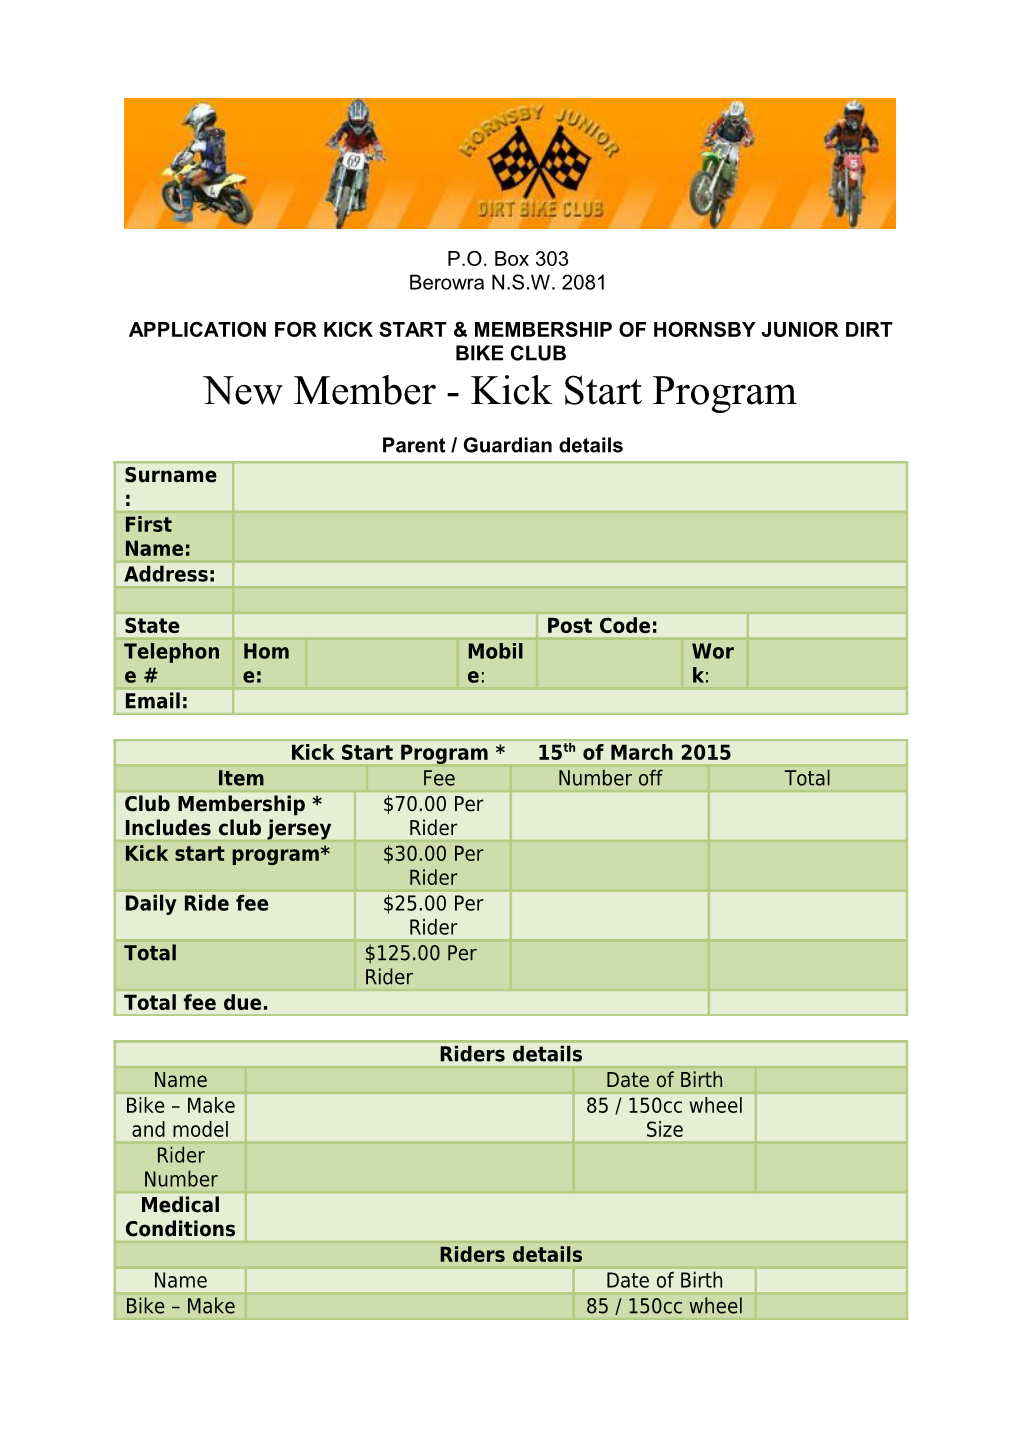 Application for Kick Start & Membership of Hornsby Junior Dirt Bike Club